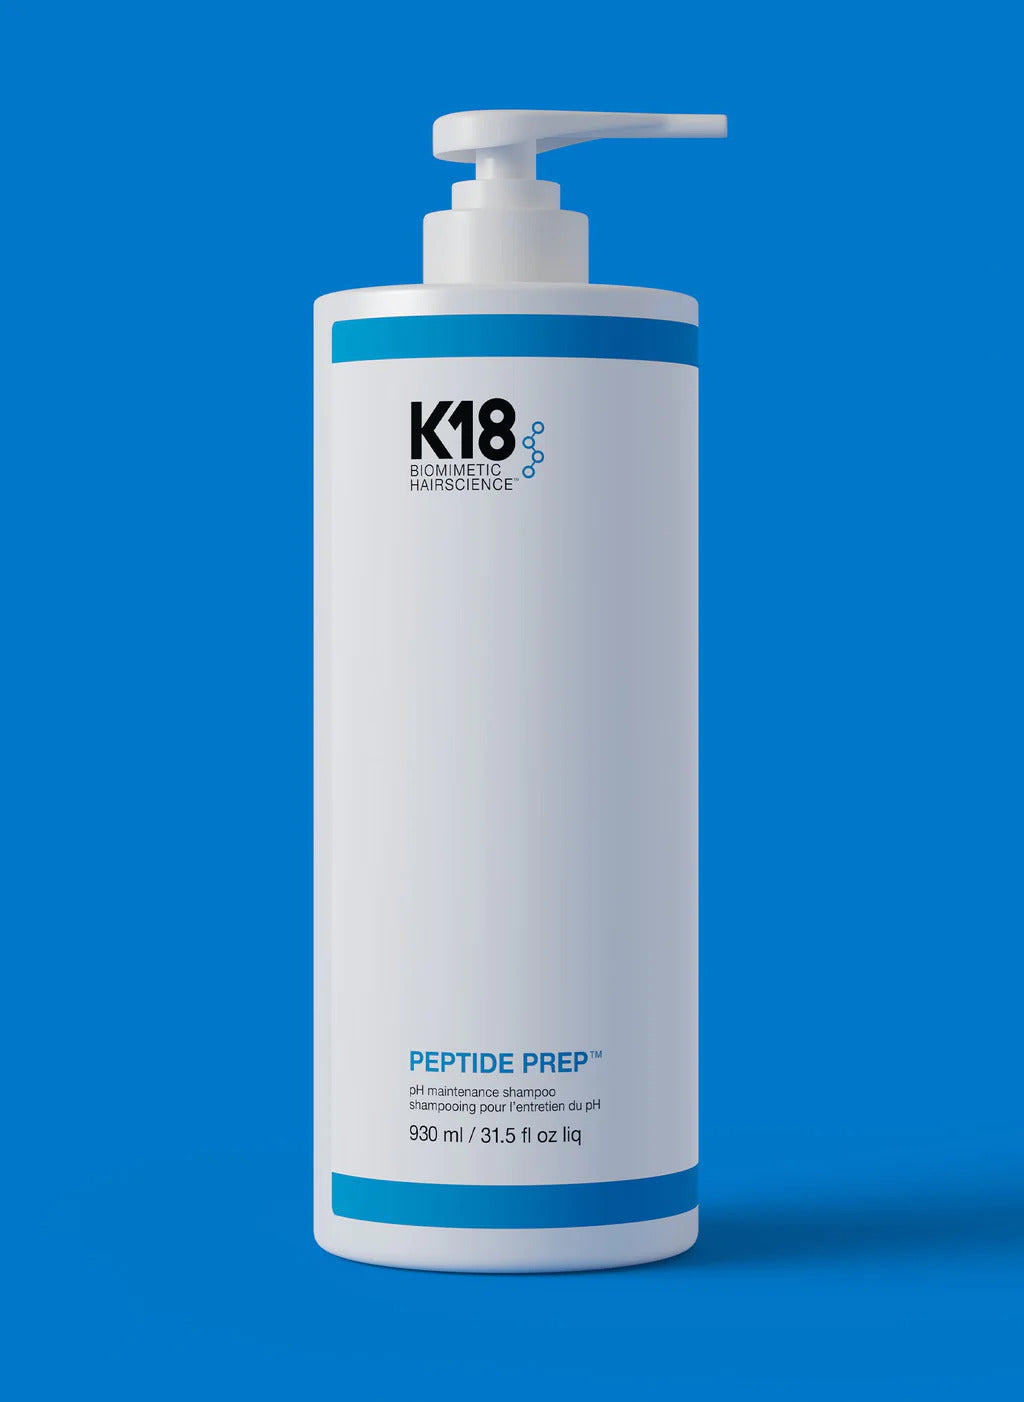 K18 Peptide Prep pH Shampoo Maintenance Shampoo Ltr 930ml/31.5oz